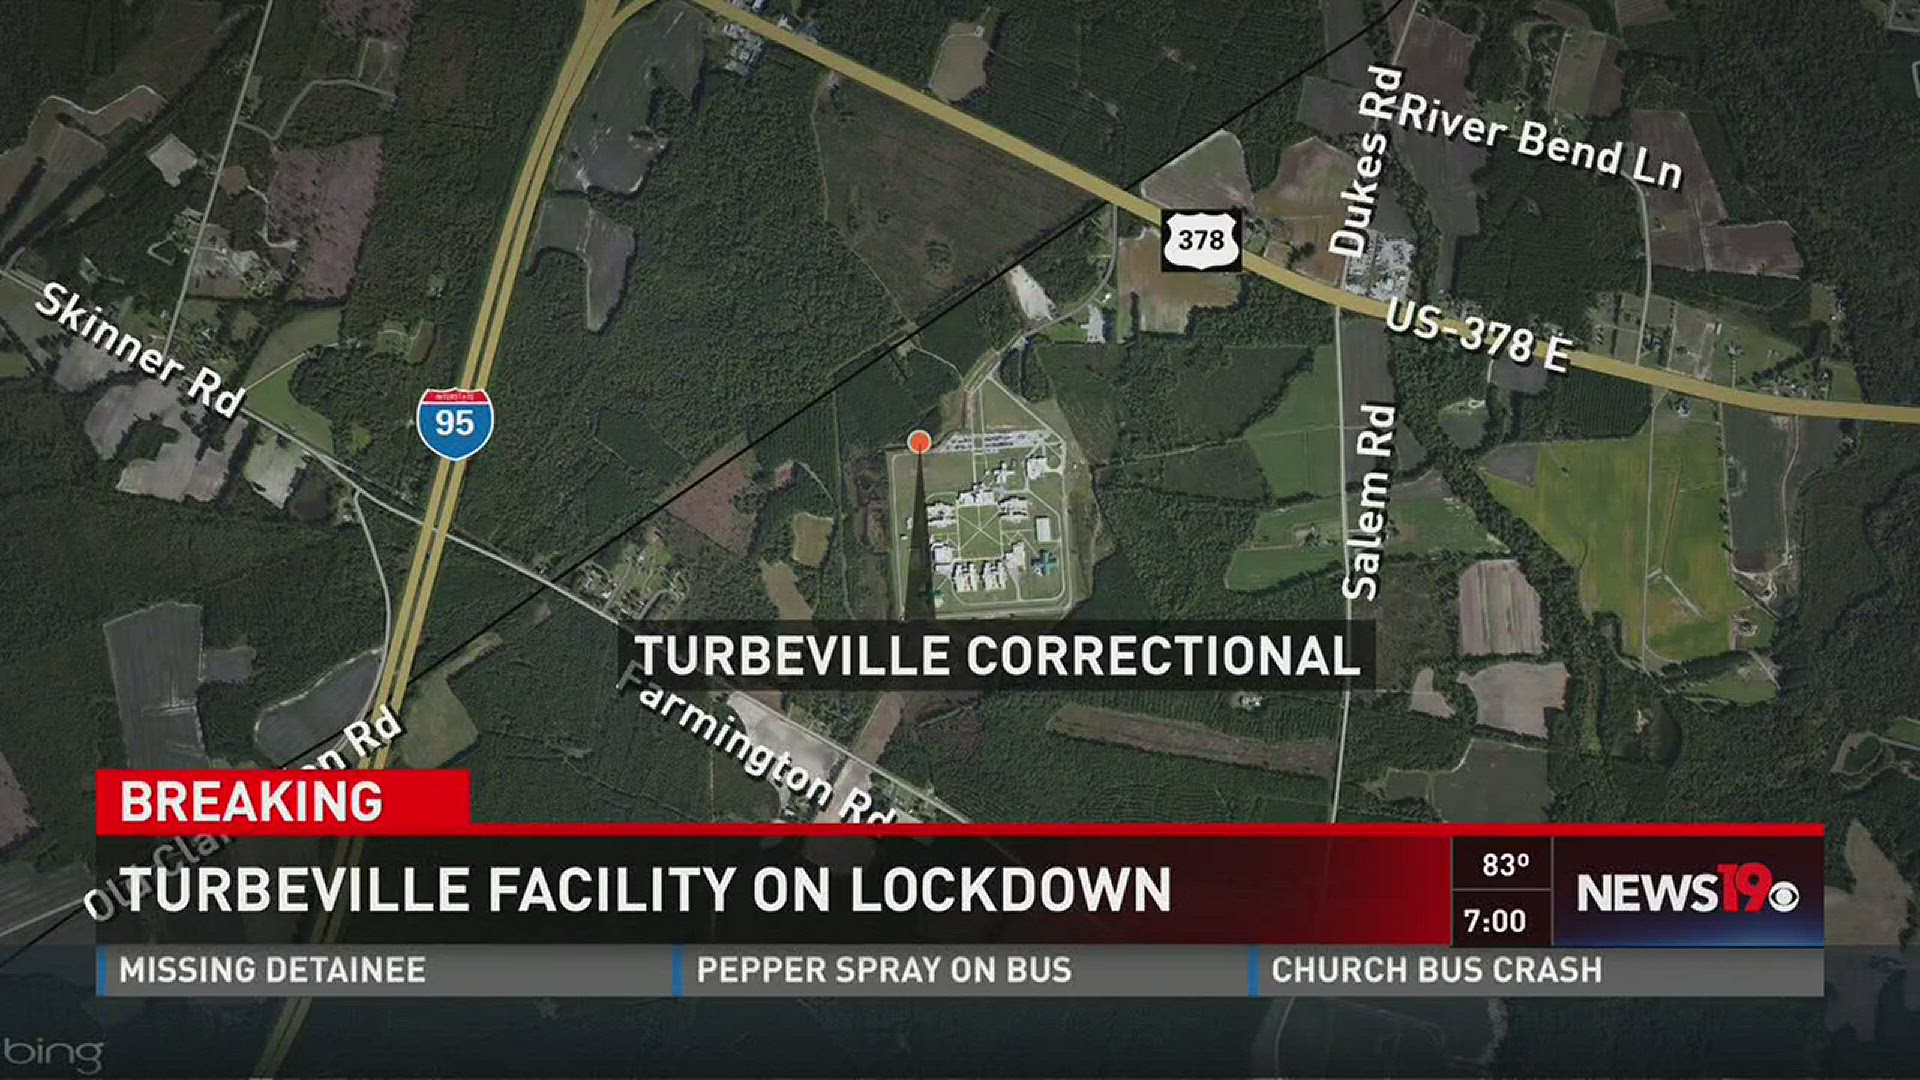 Turbeville Correctional Institution on Lockdown